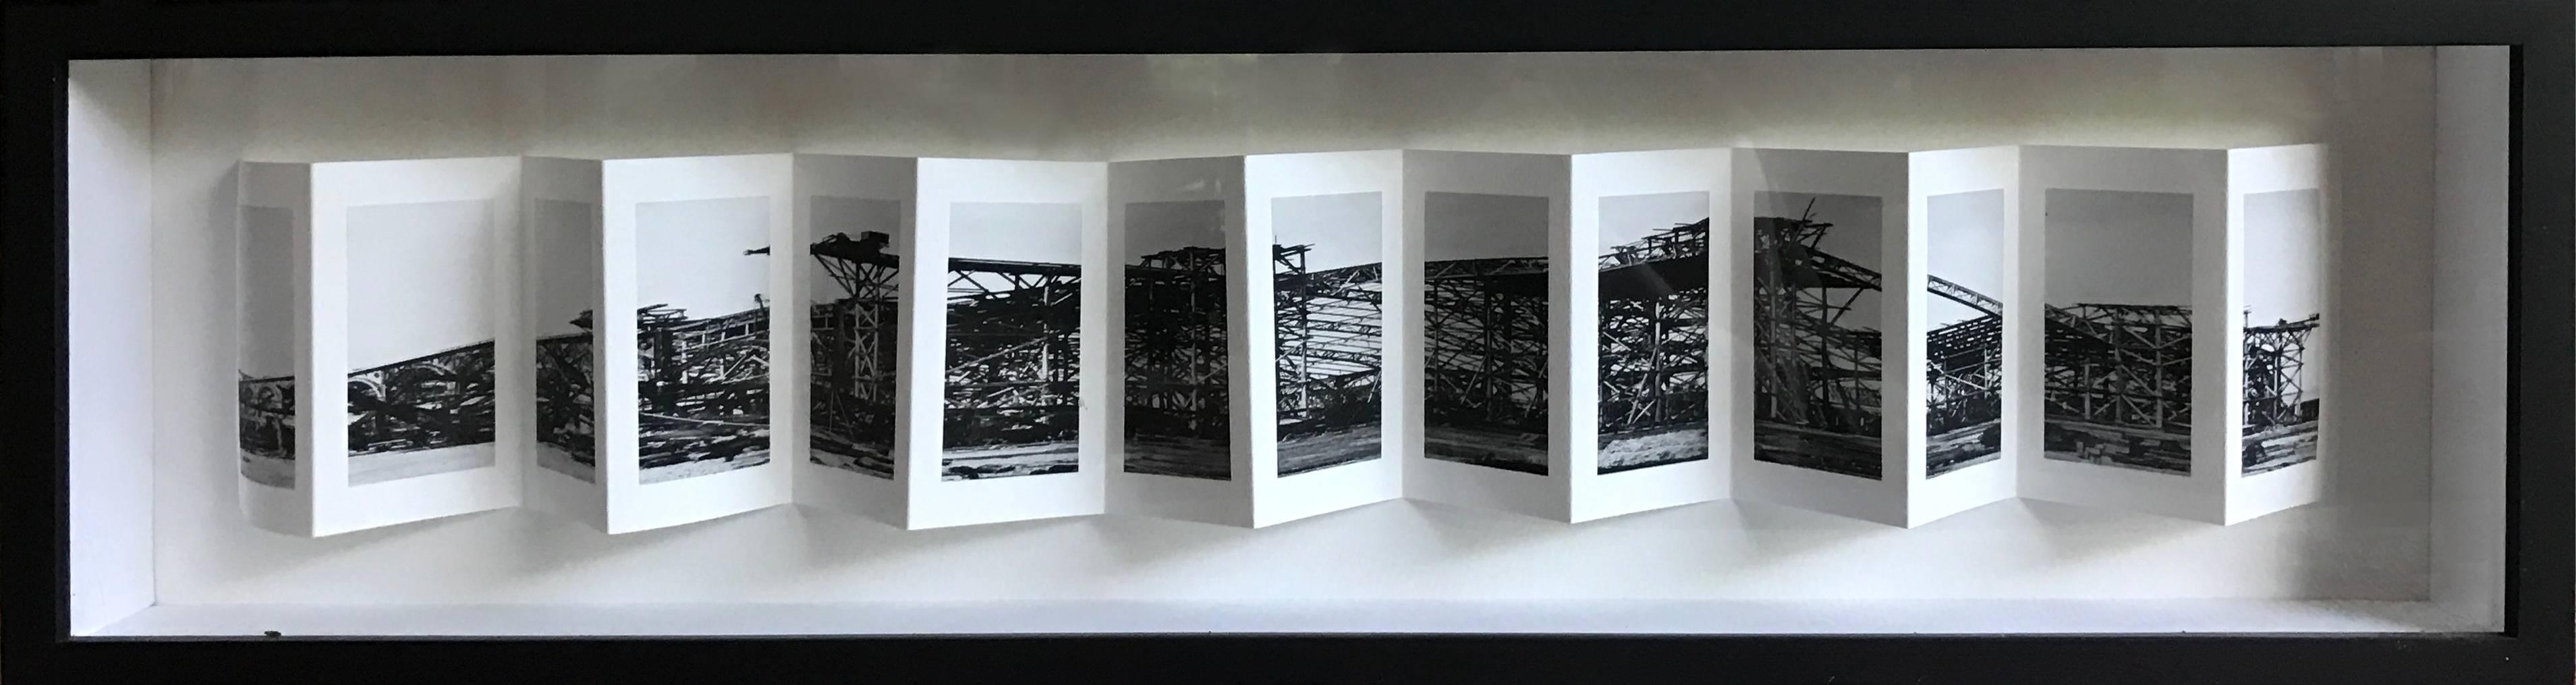 Viviana Zargón Black and White Photograph - Palais des machines plegado